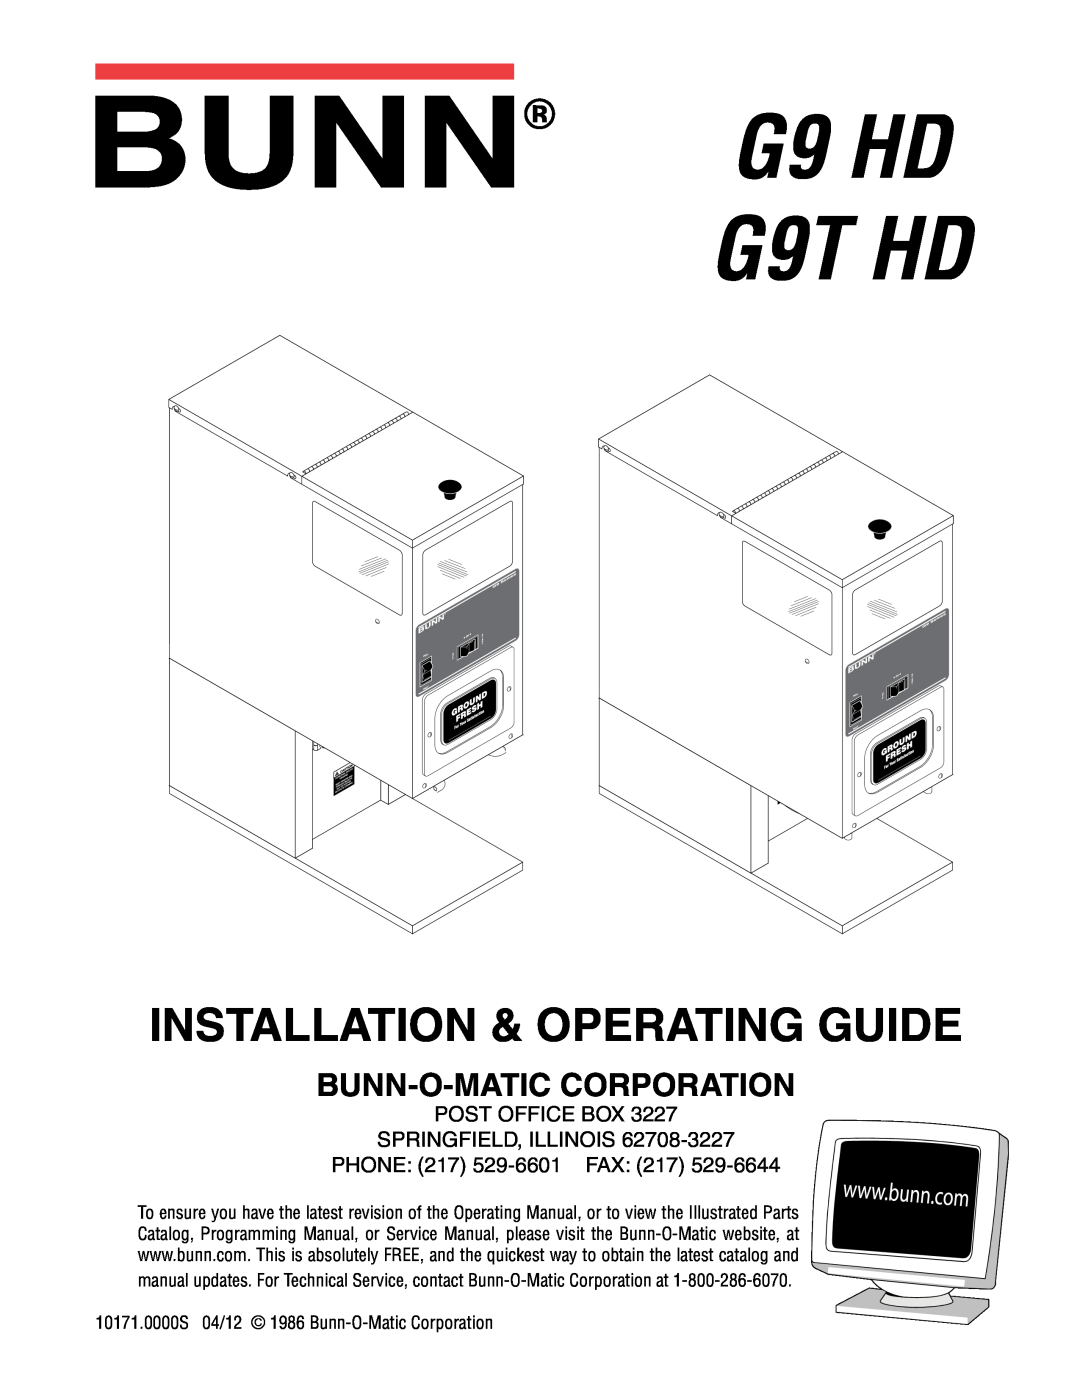 Bunn service manual G9 HD G9T HD, Installation & Operating Guide, Bunn-O-Matic Corporation 